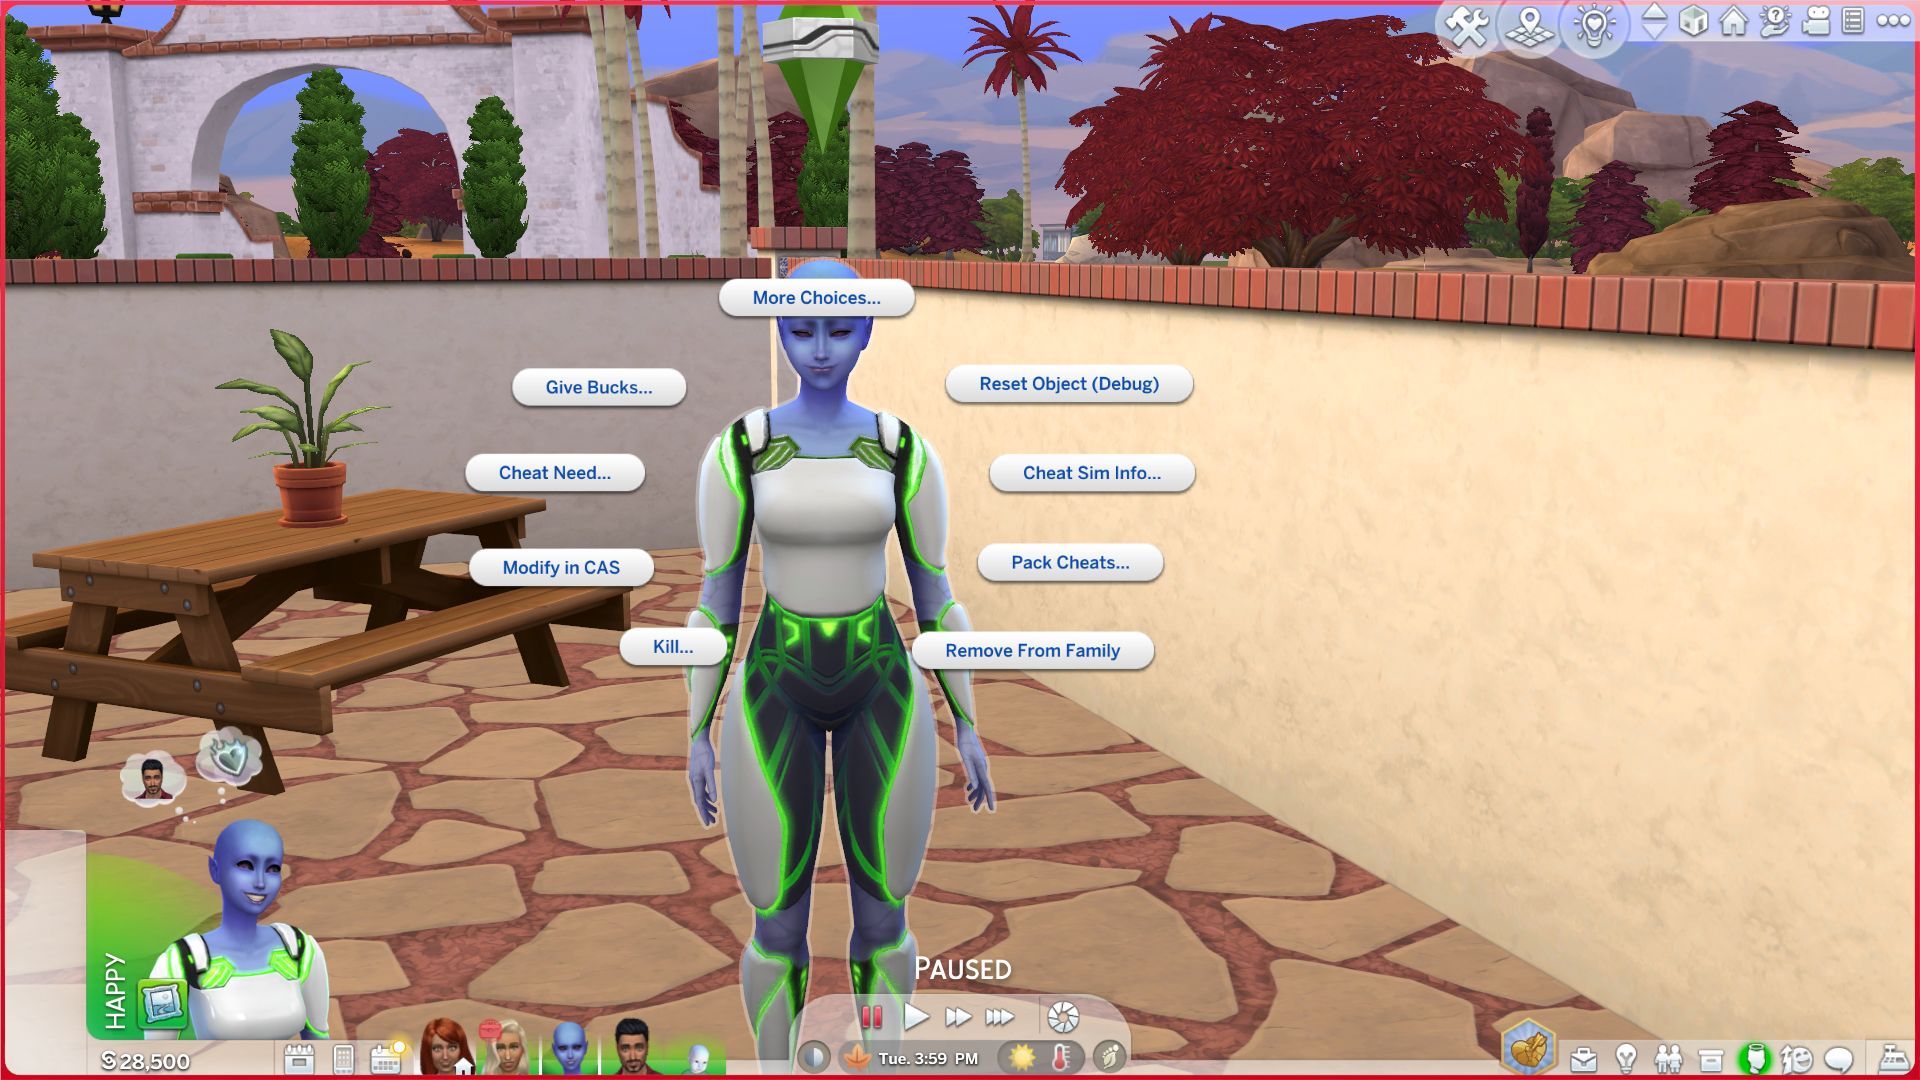 An image of the testingcheats menu surrounding an alien version of Nina Caliente from Sims 4.